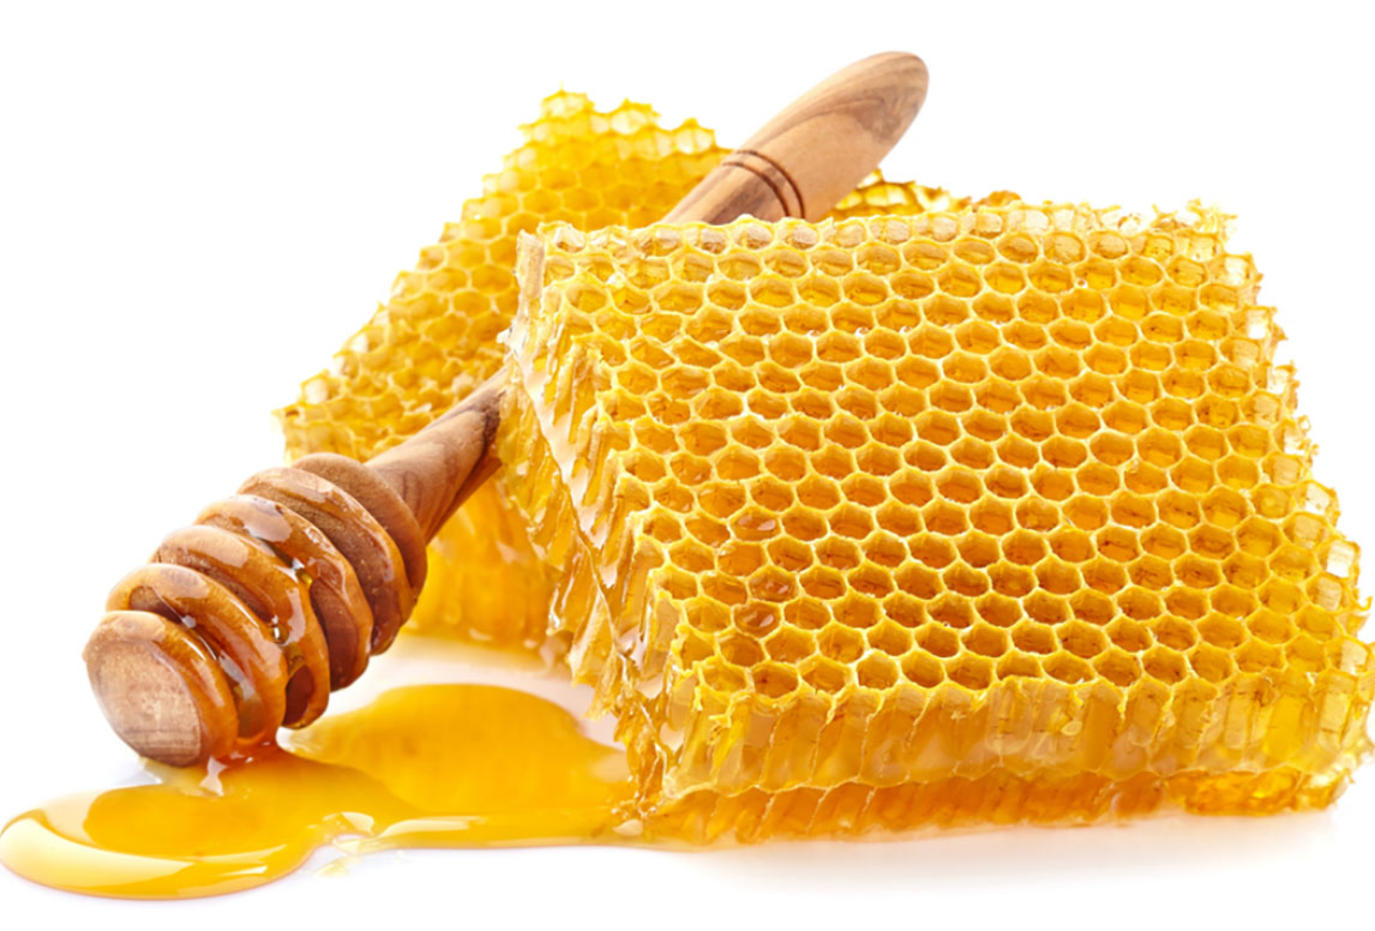 Бешеный мед. Мёд в сотах. Соты пчелиные. Соты меда. Пчелиные соты с медом.